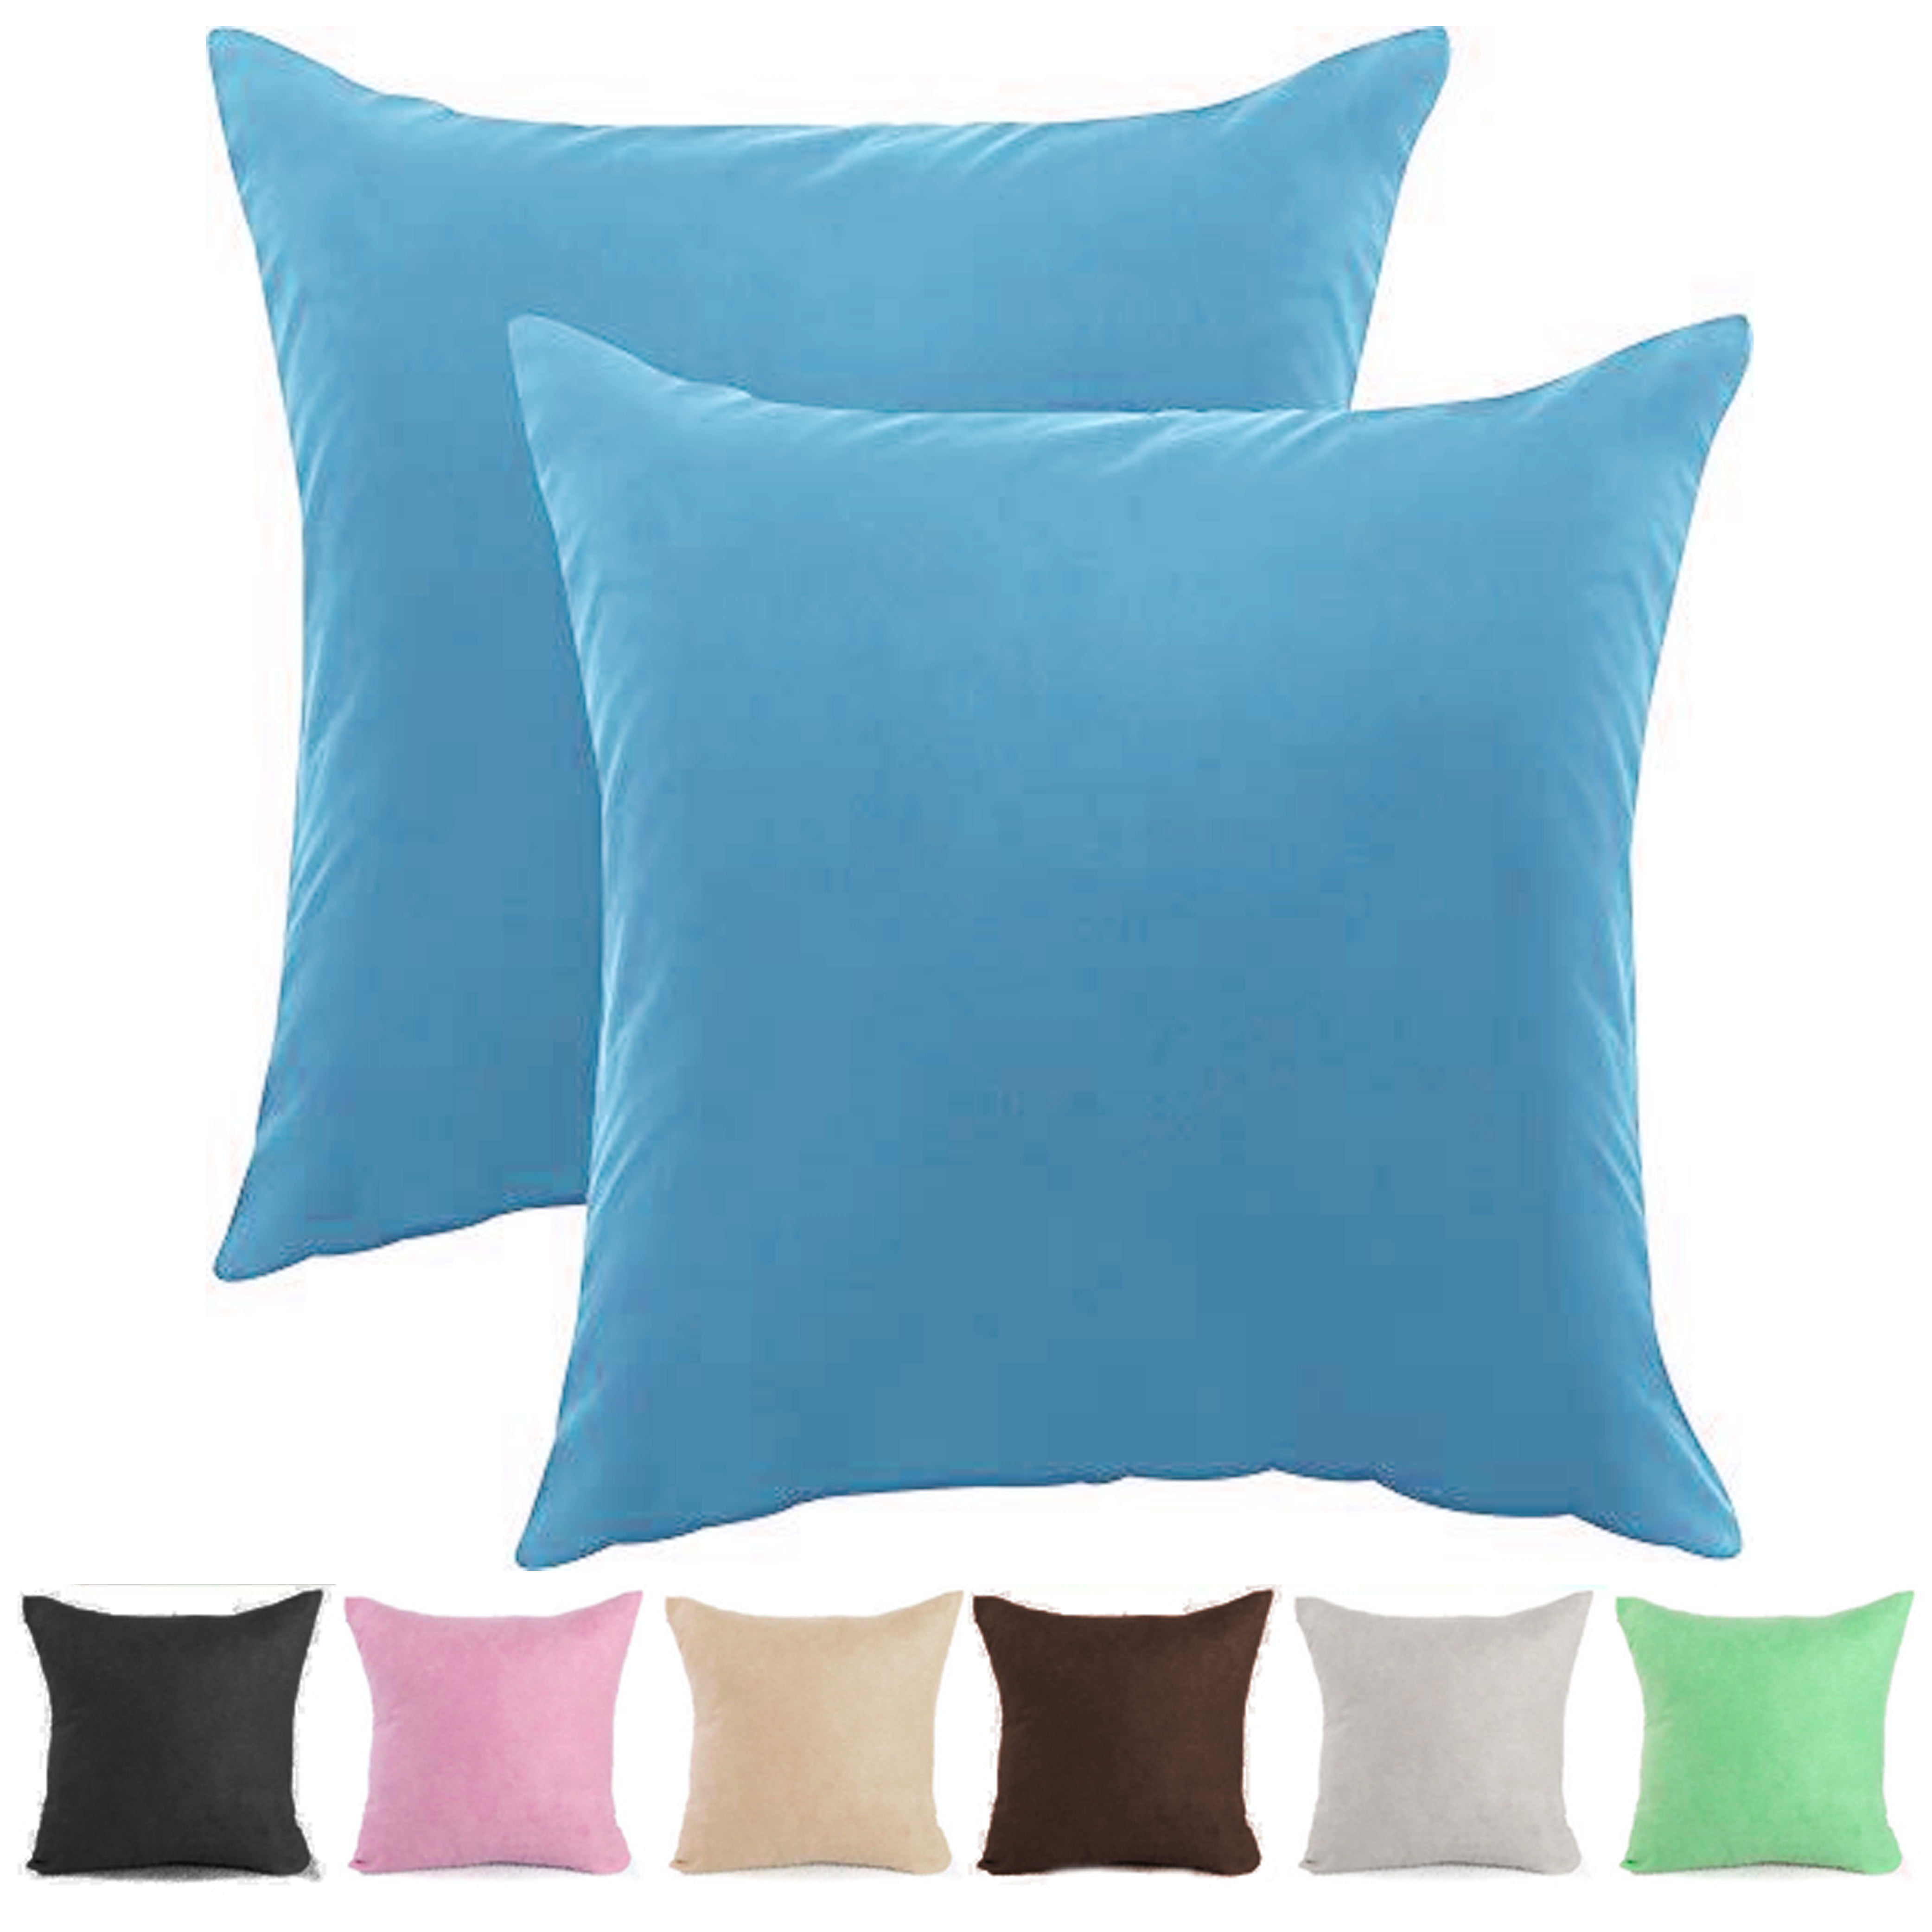 Retro Route 66 Print Linen Pillow Case Soft Cushion Cover Home Cafe Decor Health 